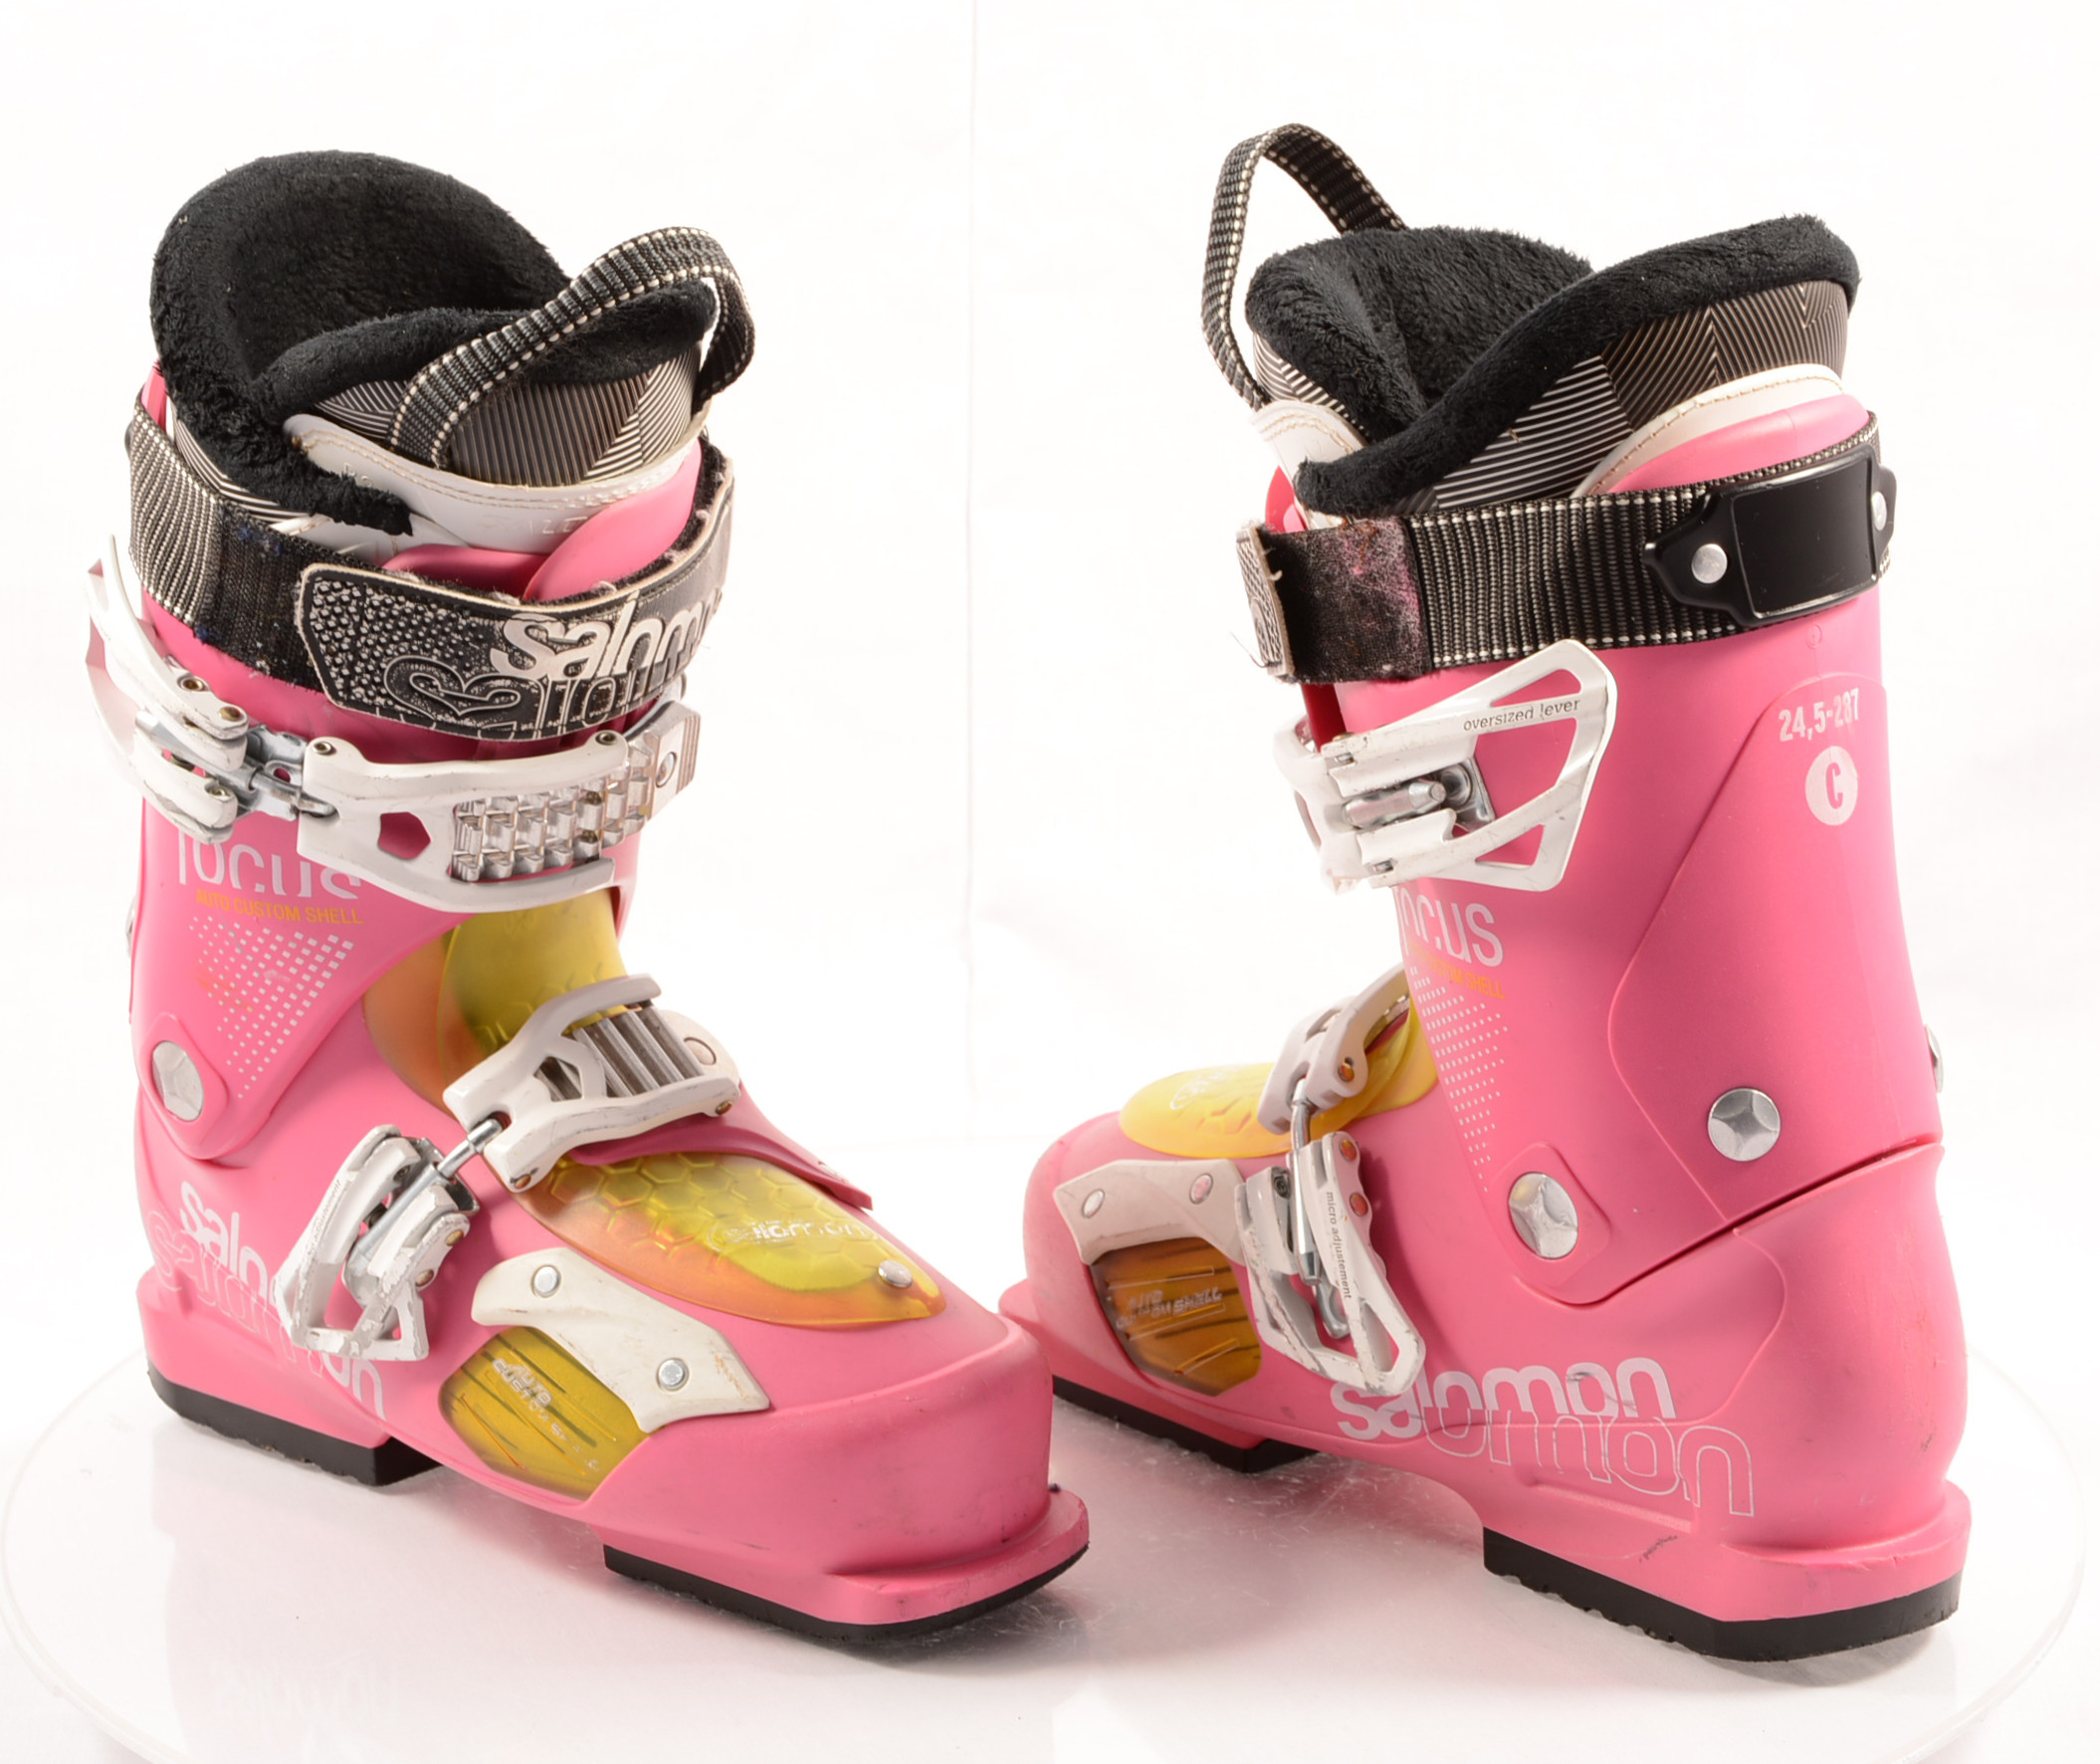 women's ski boots SALOMON FOCUS pink, AUTO CUSTOM SHELL, OVERSIZED LEVER,  micro, macro - Mardosport.com